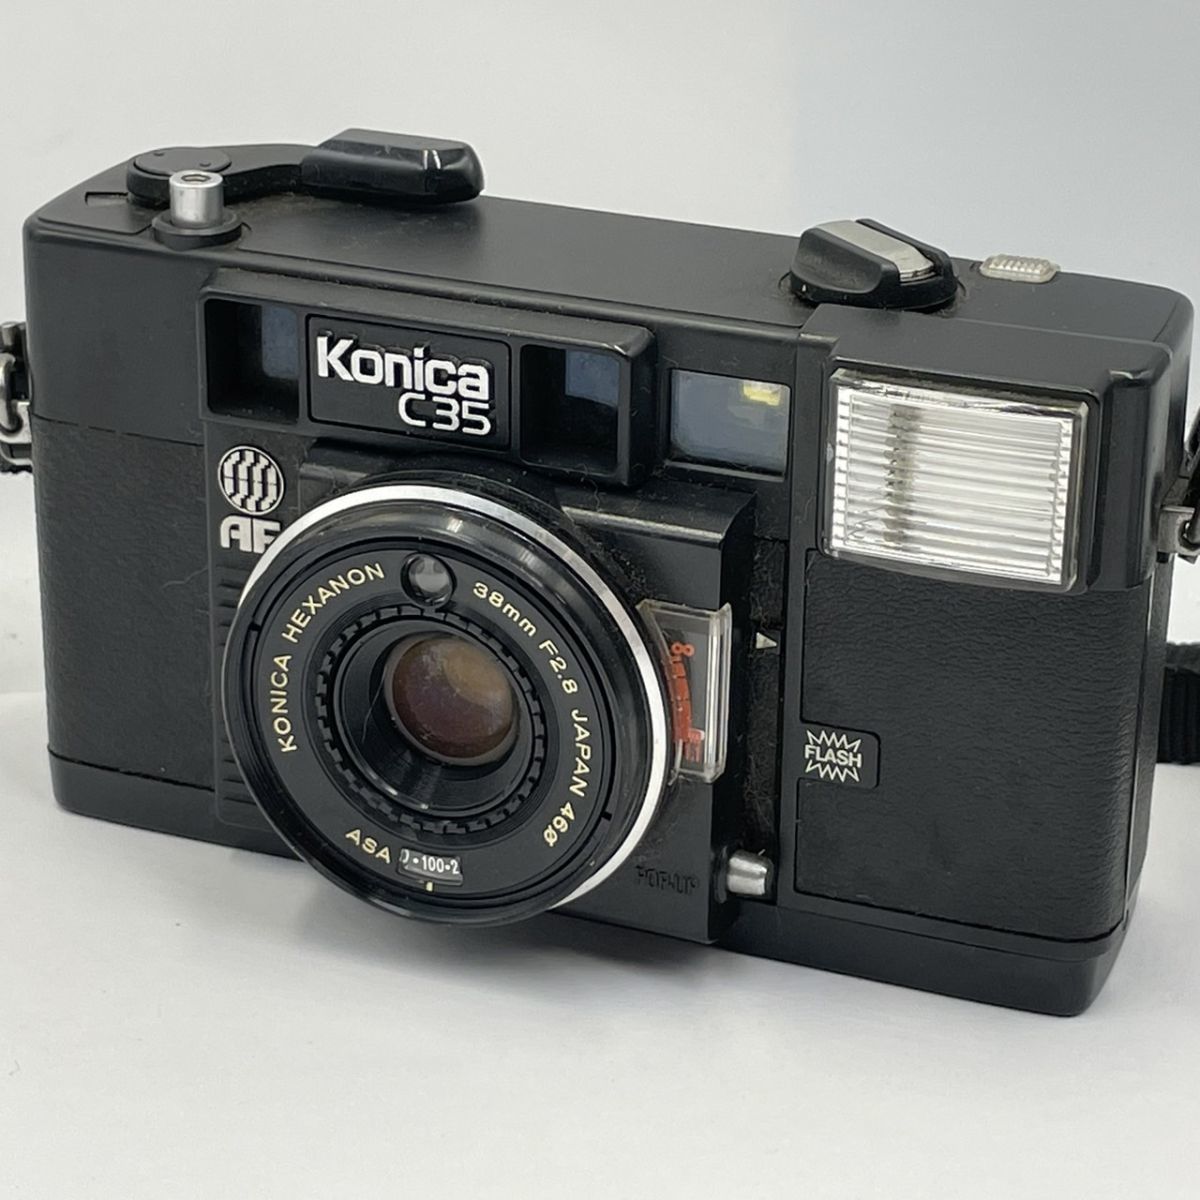 V311-000-000 Konica コニカ C35 コンパクトフィルムカメラ ジャーニー